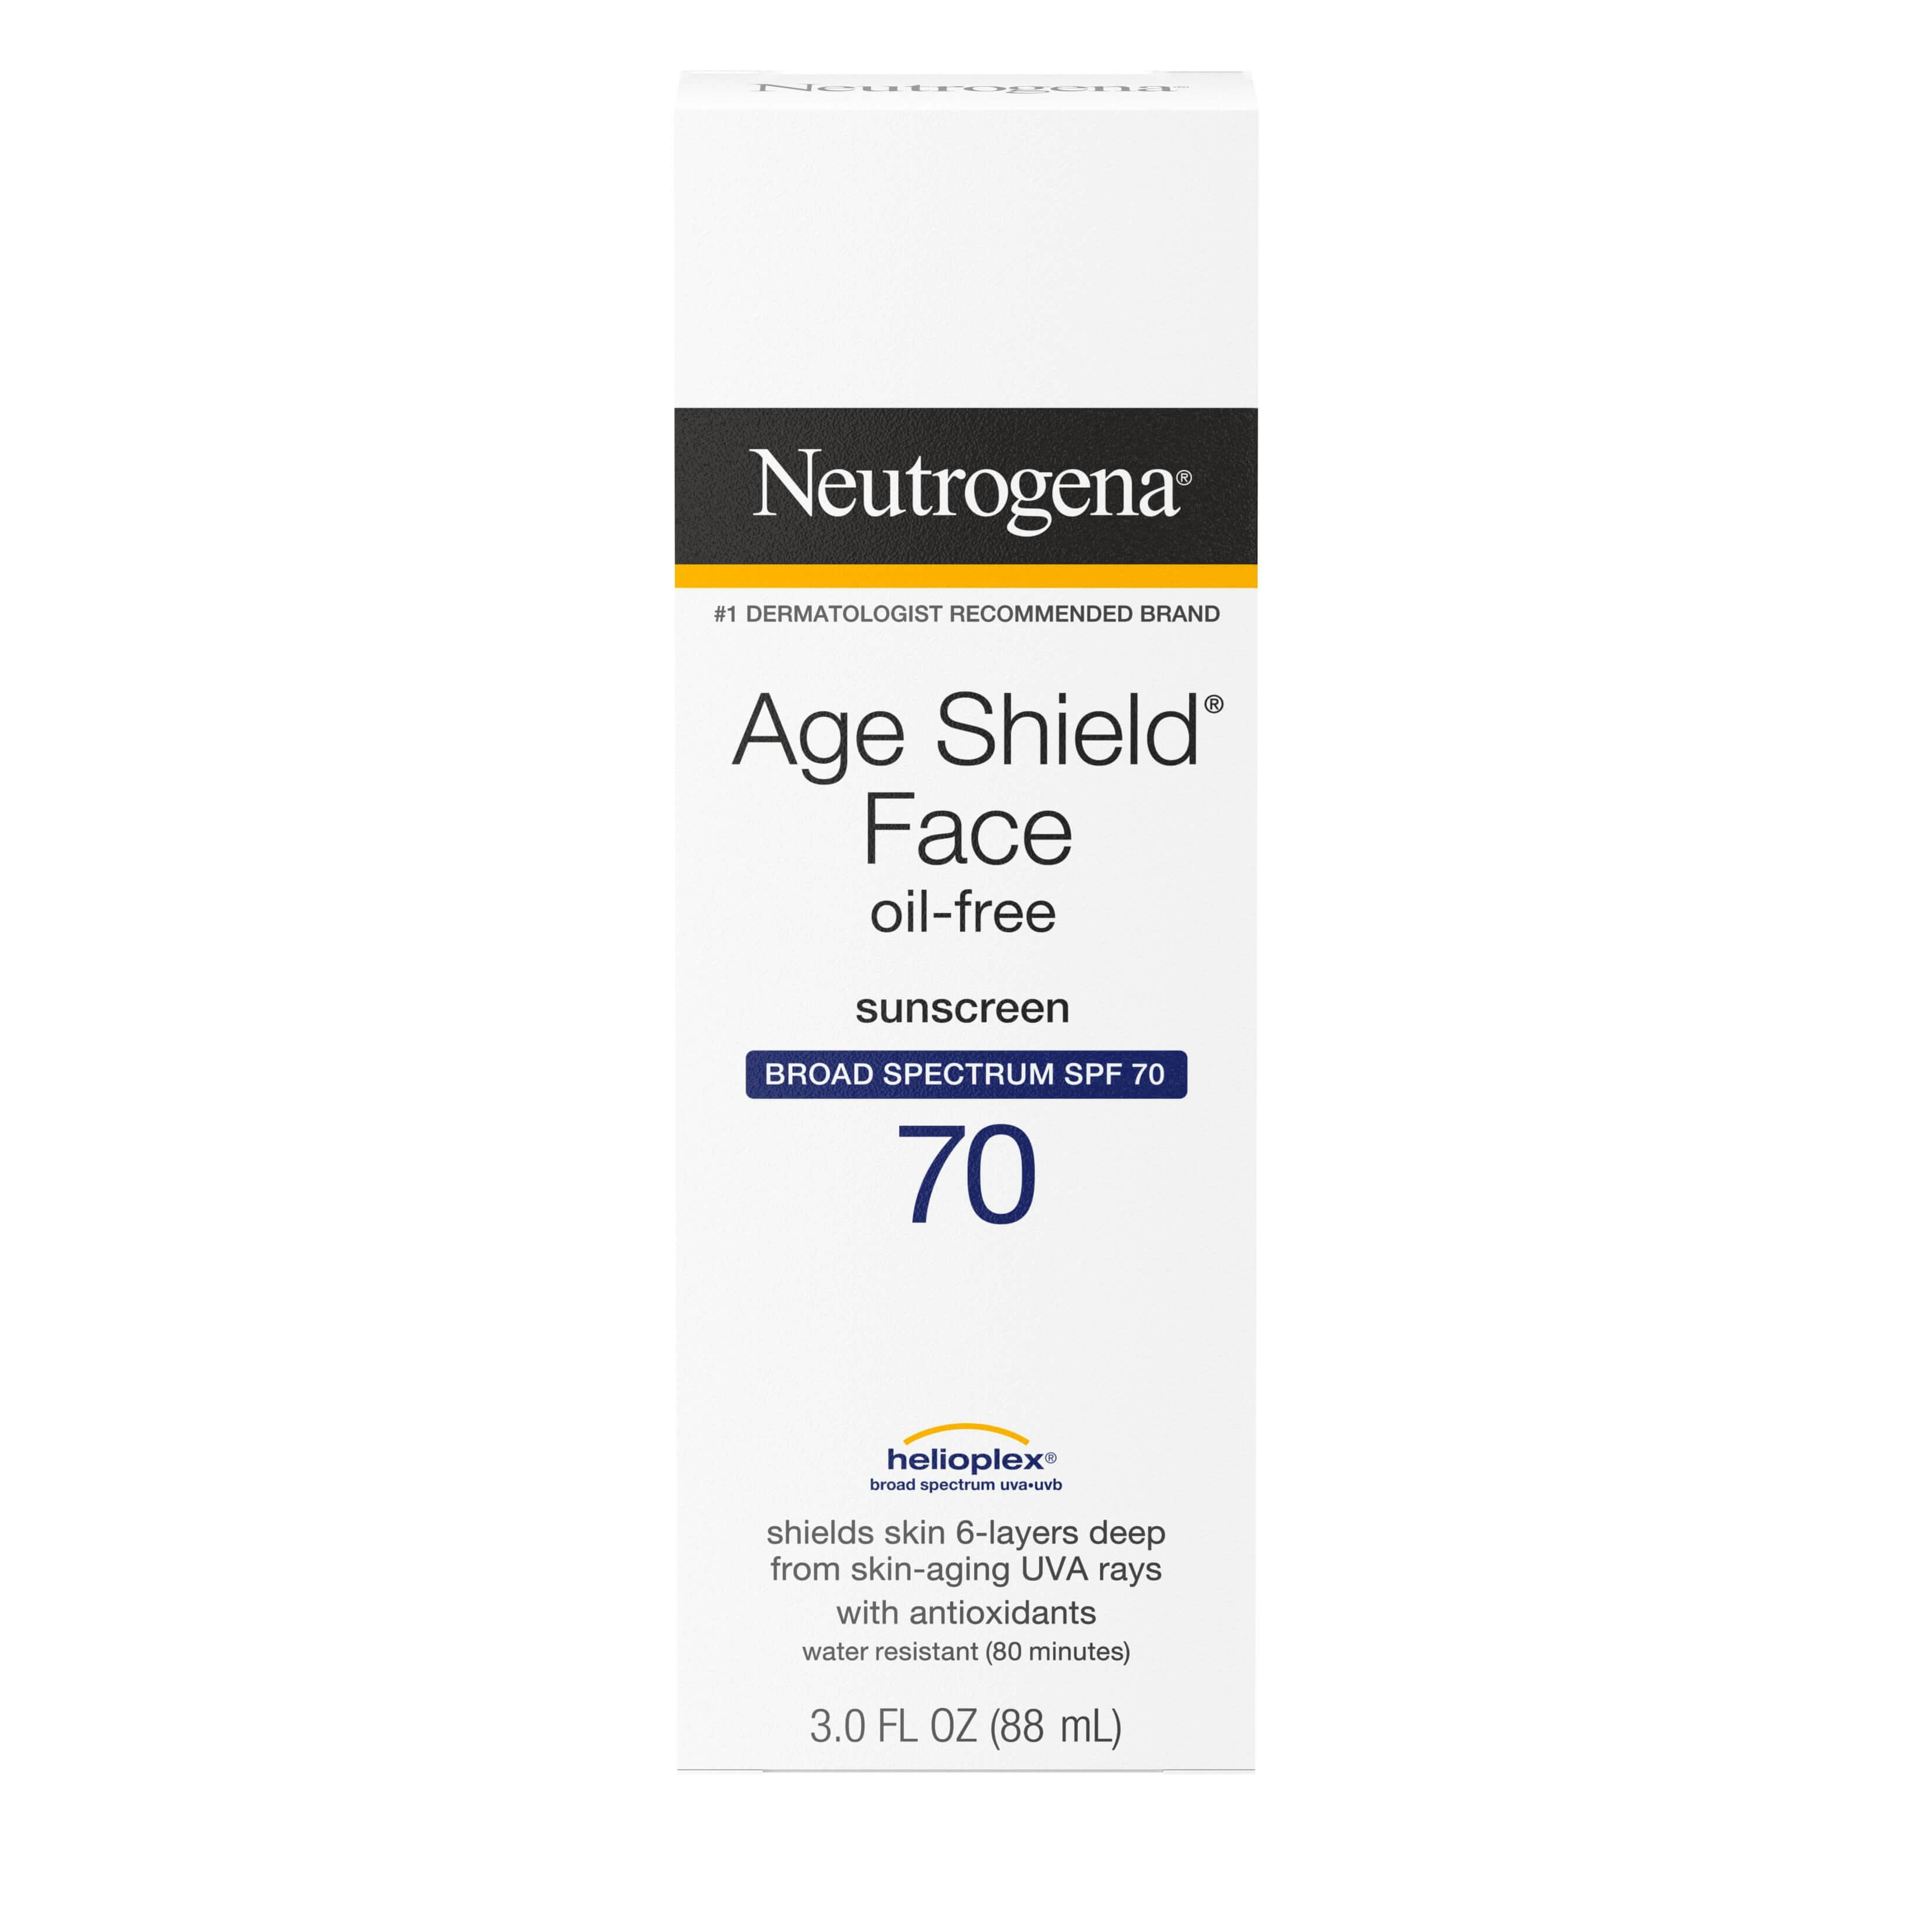 neutrogena sunscreen recall refund amount